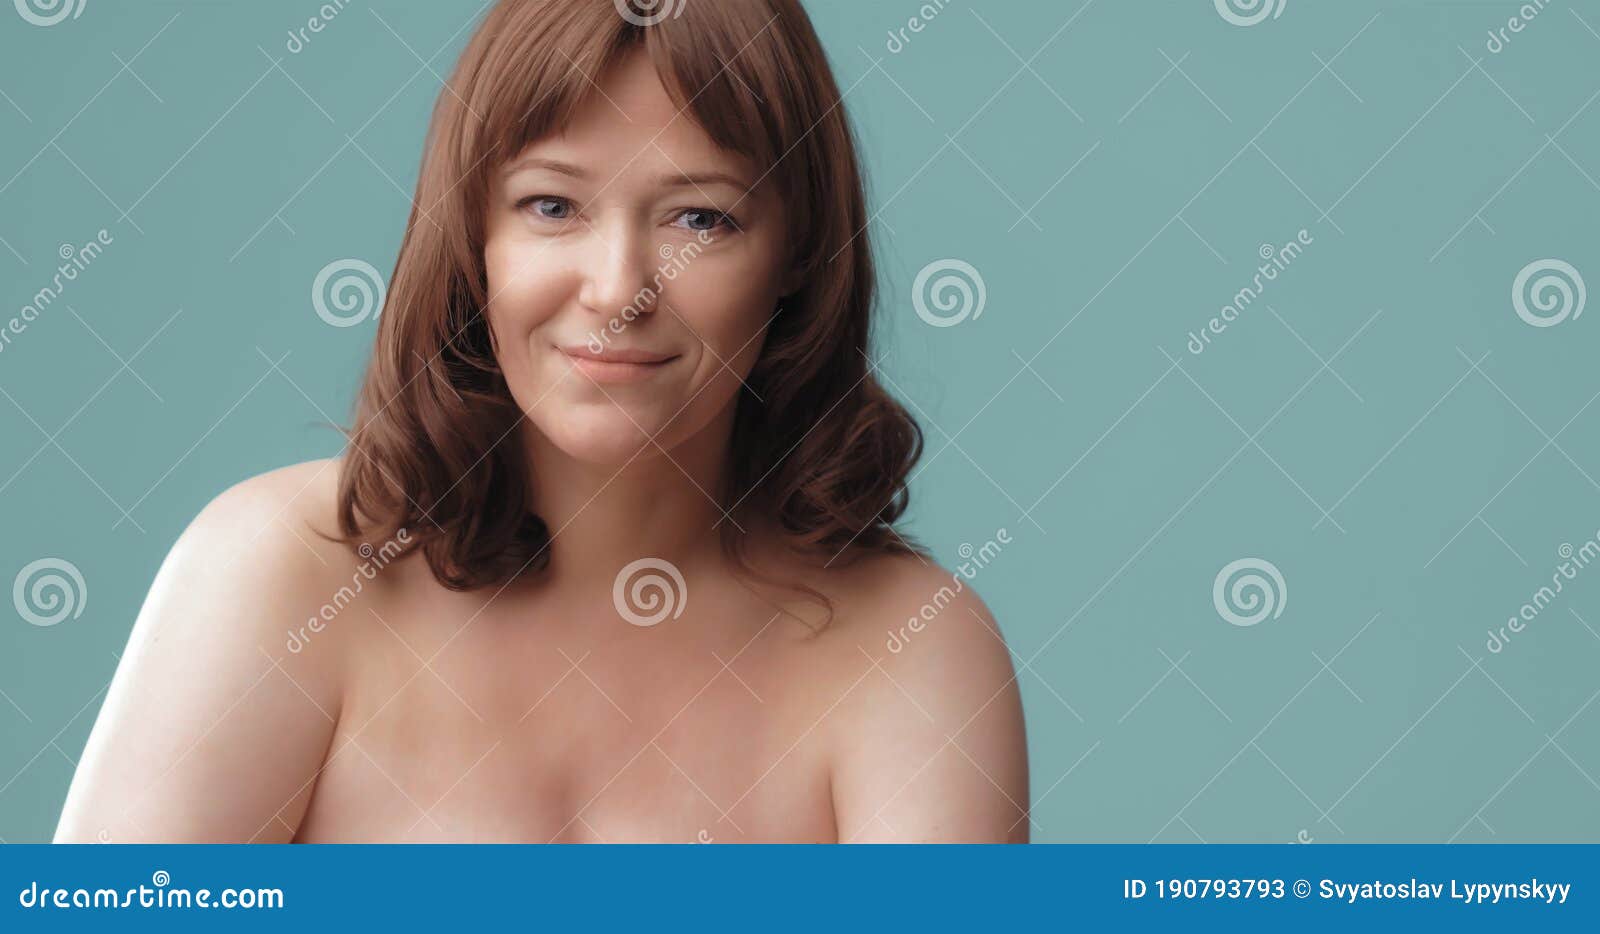 Nude Beautiful Mature Woman Portrait on Color Color Background